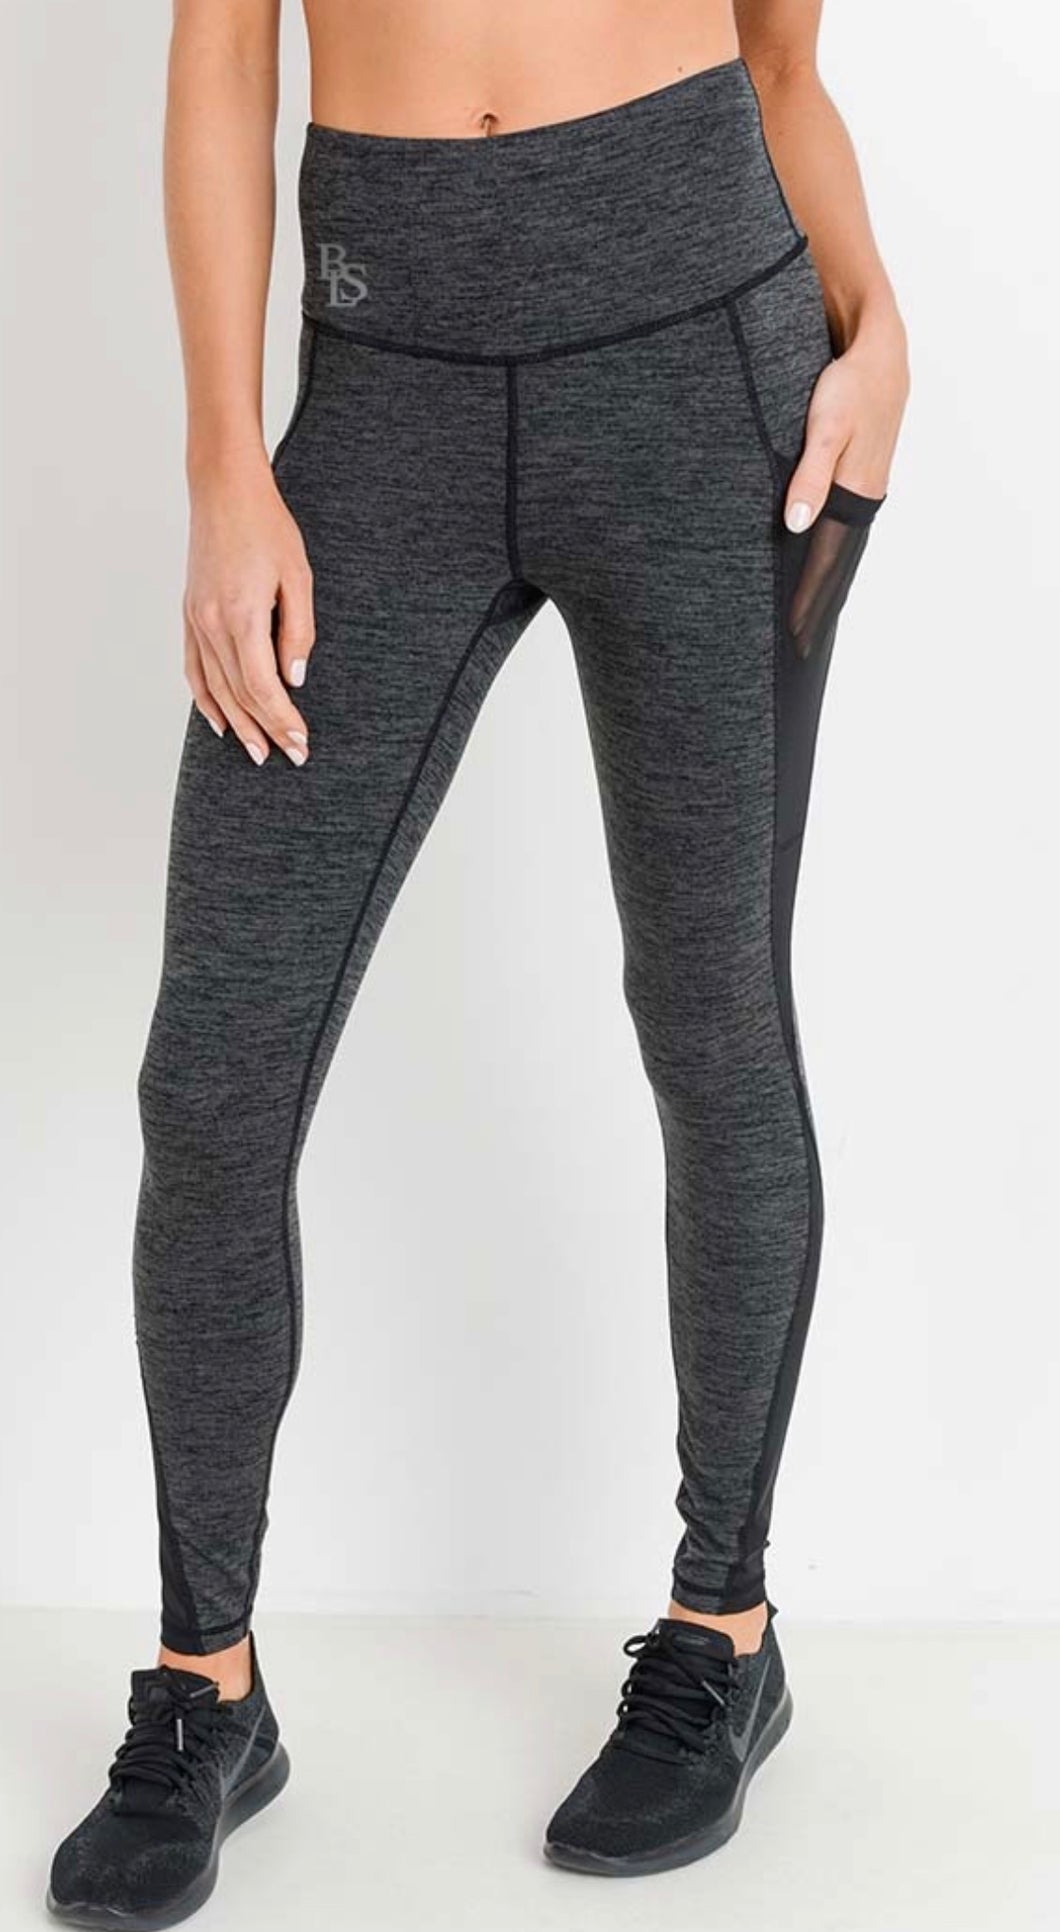 L.LEGGINGS CORE Sports leggings - Women - Diadora Online Store US